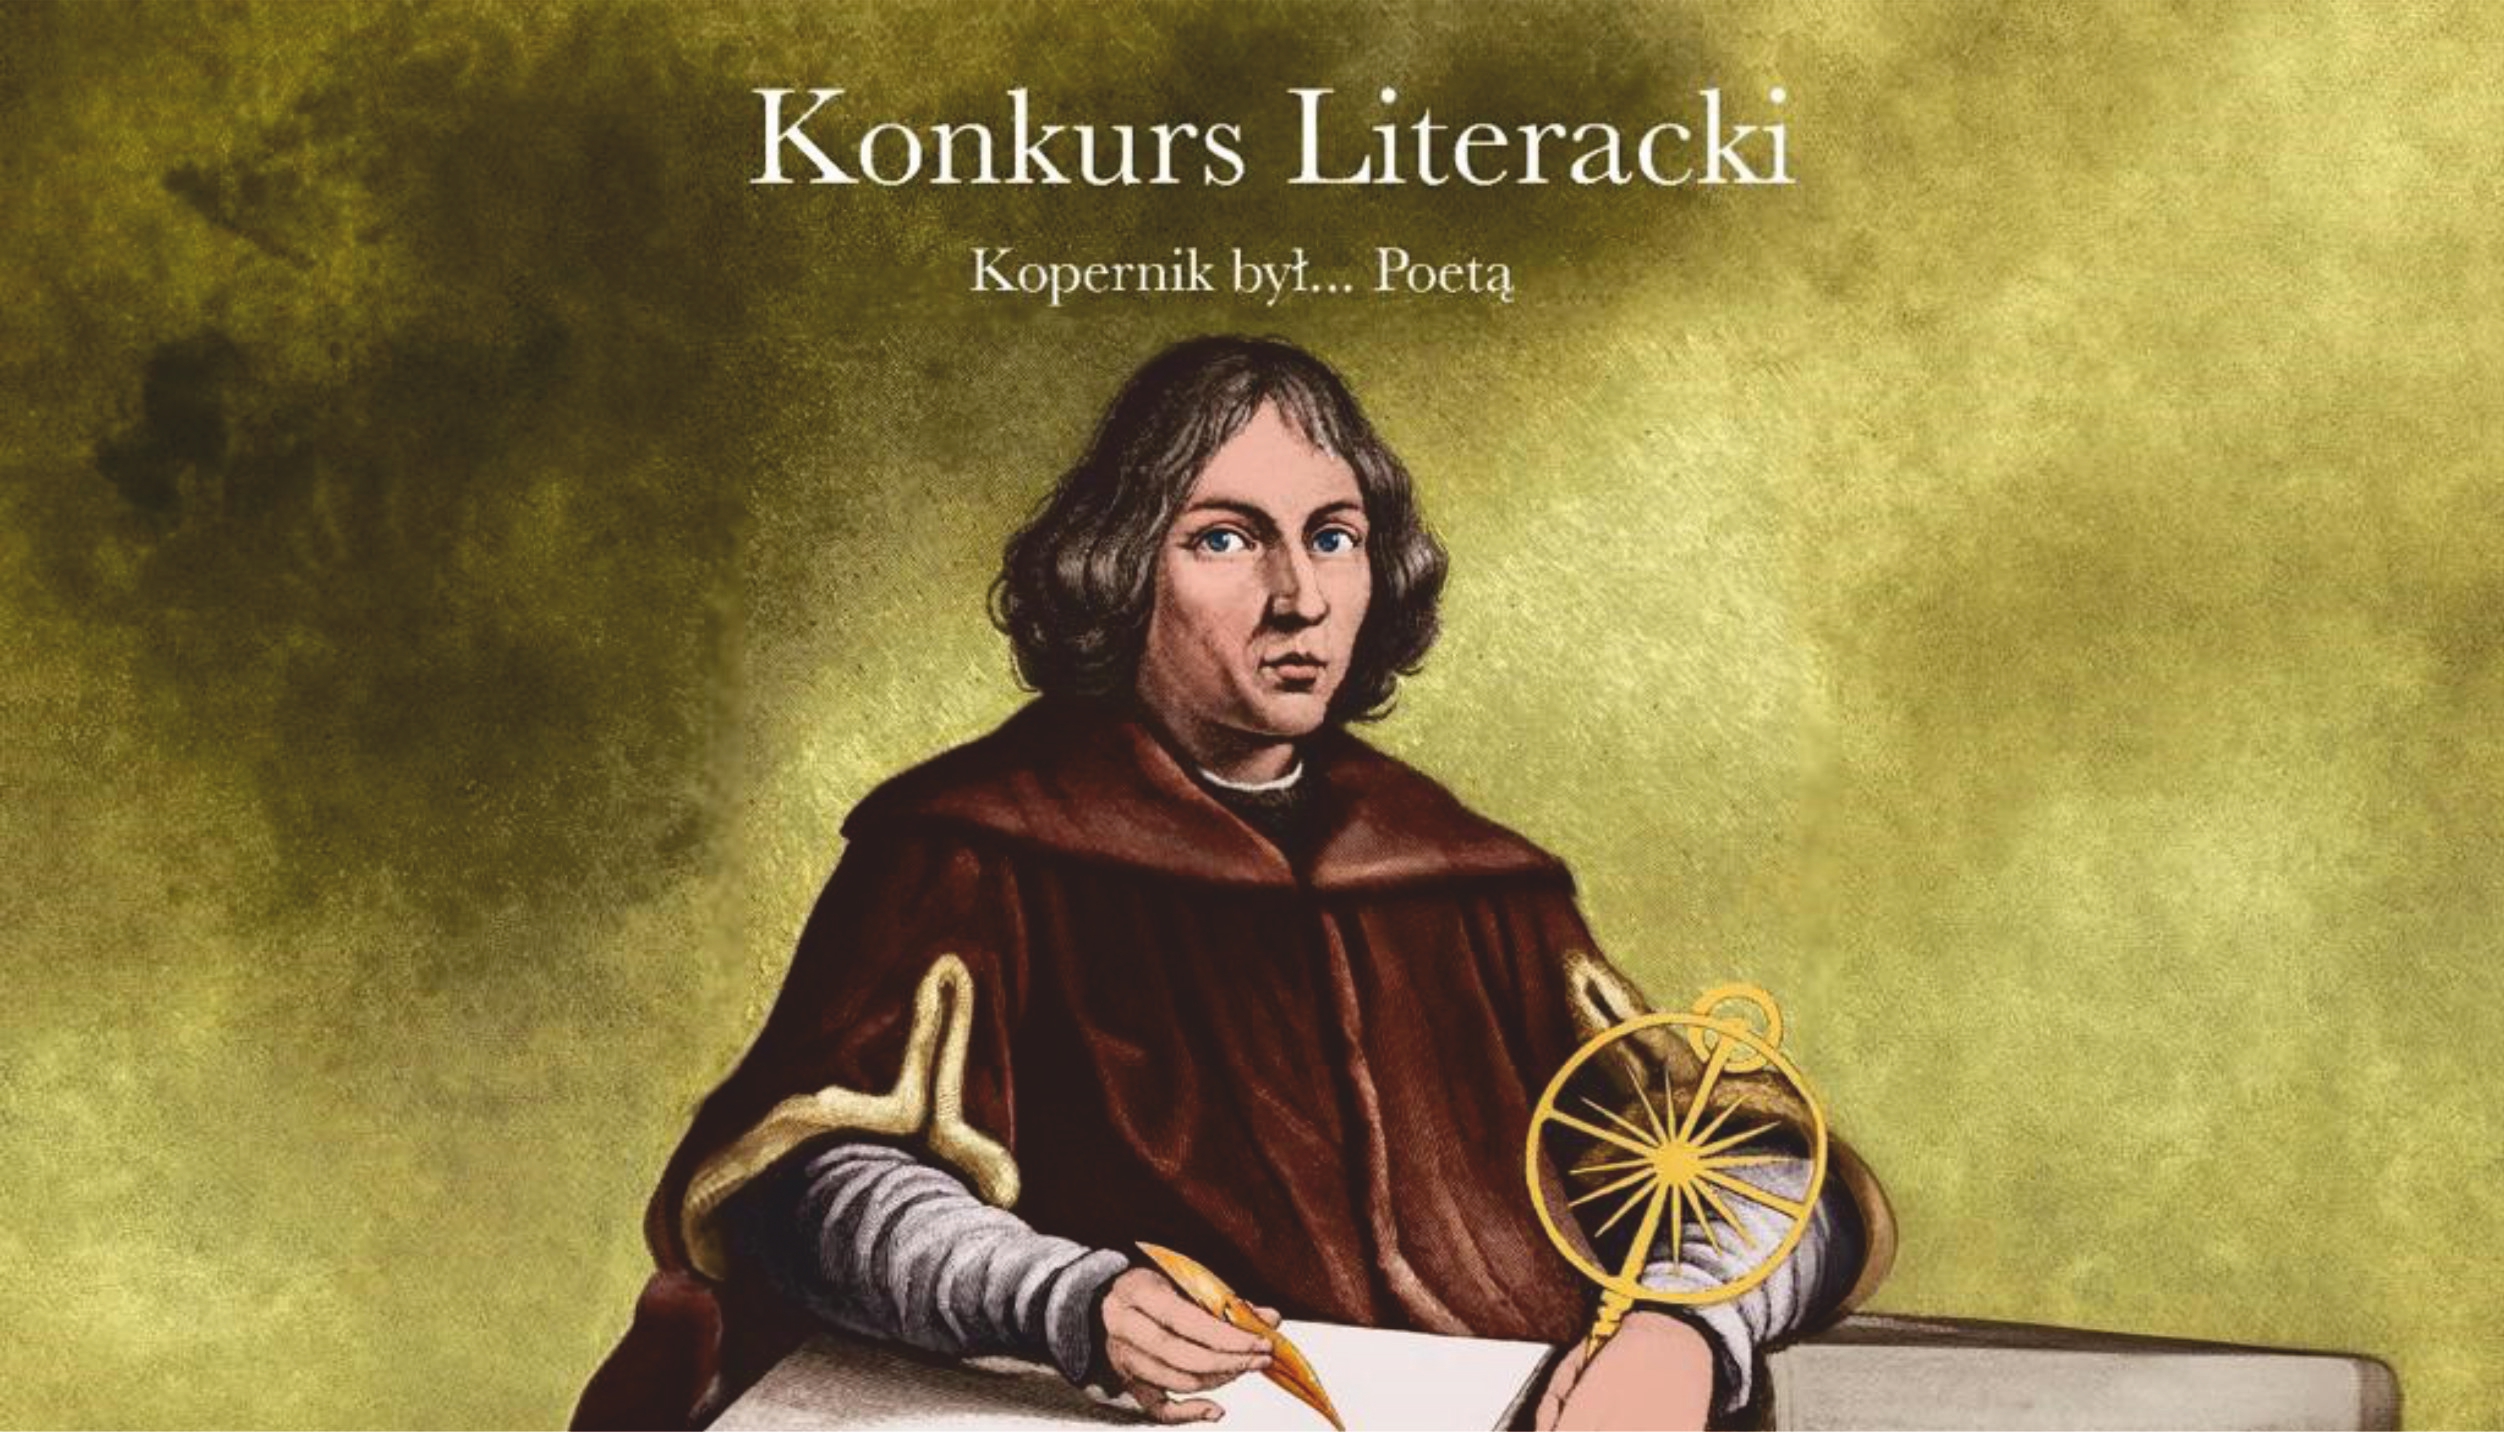 Kopernik był... poetą - konkurs literacki